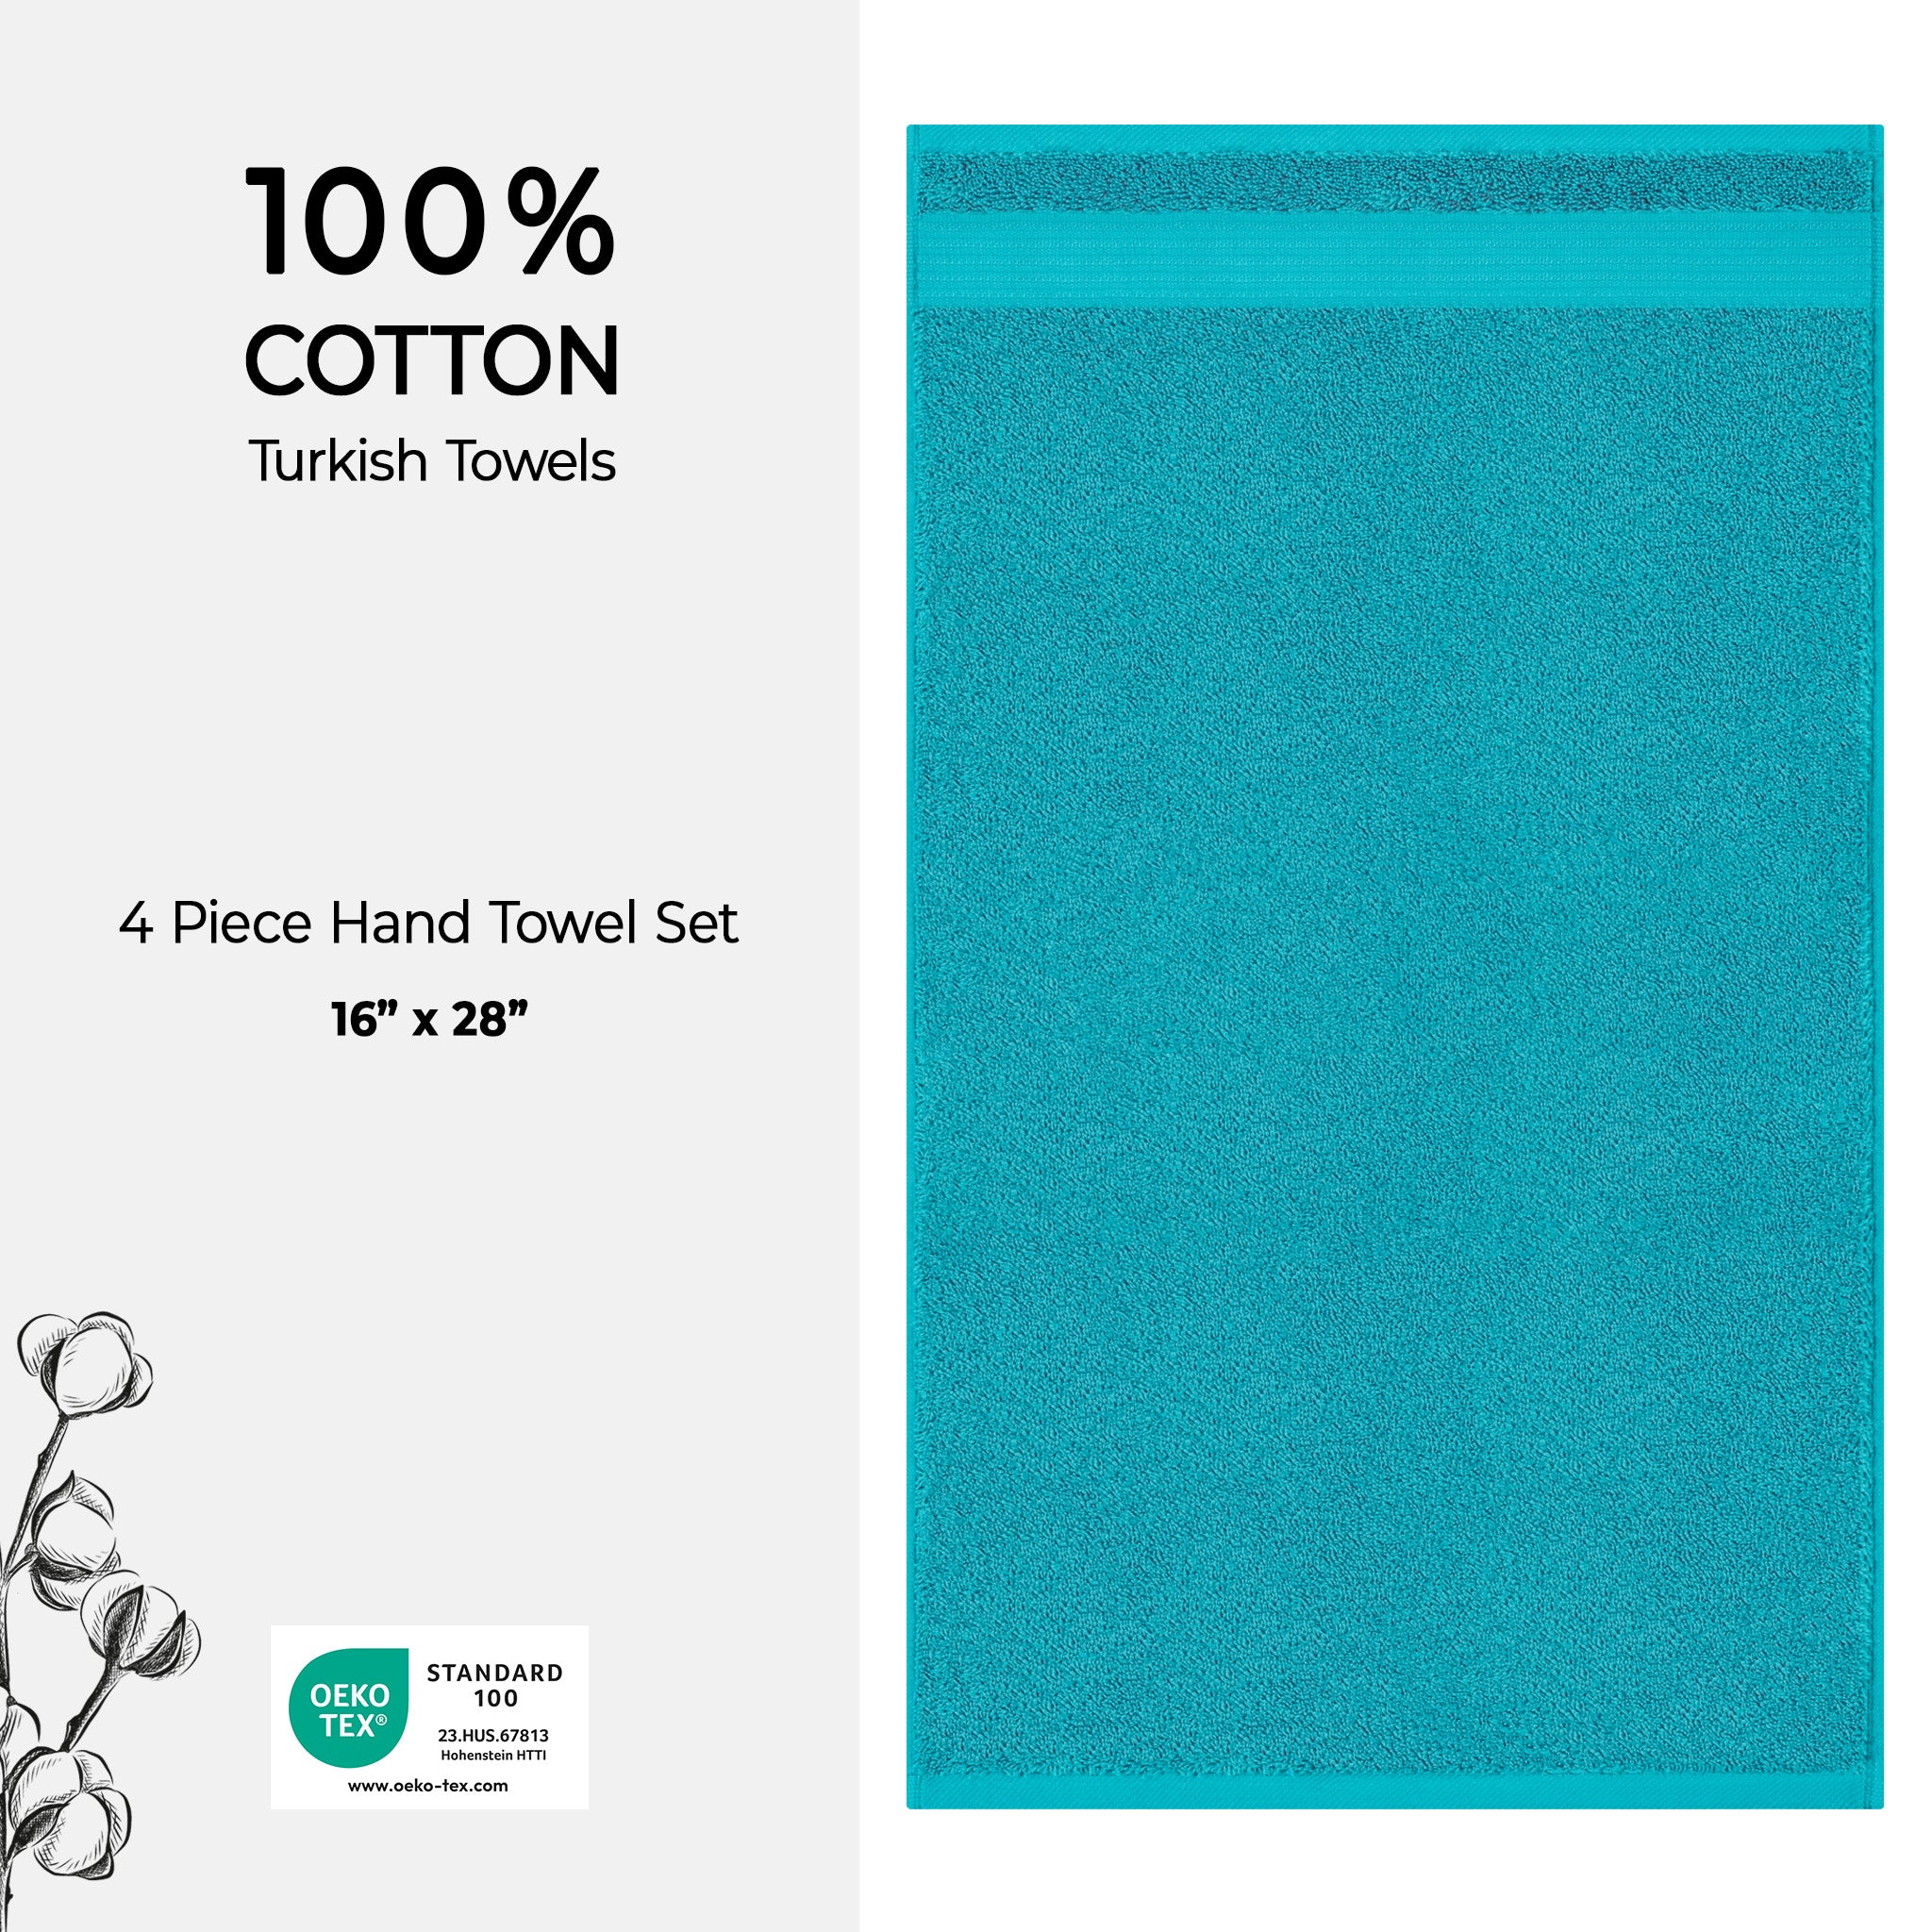 American Soft Linen Bekos 100% Cotton Turkish Towels, 4 Piece Hand Towel Set -aqua-blue-04